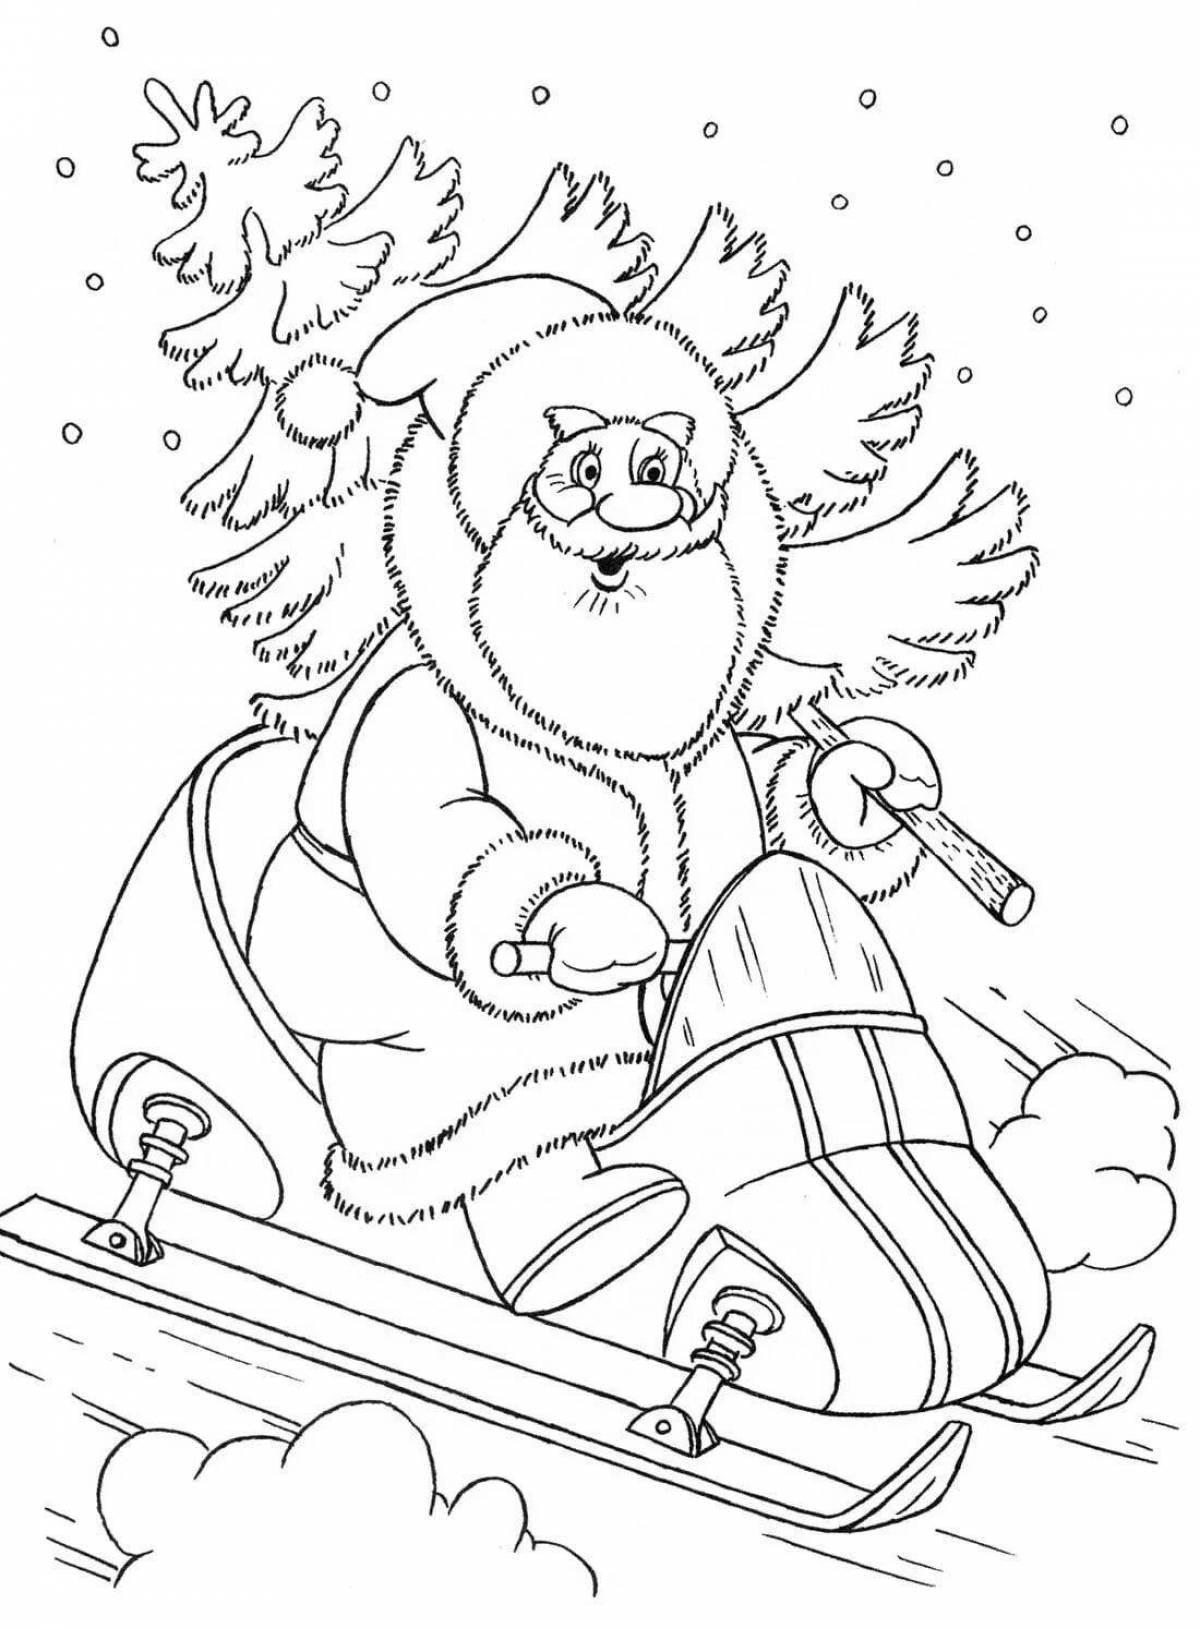 Fancy santa claus coloring page